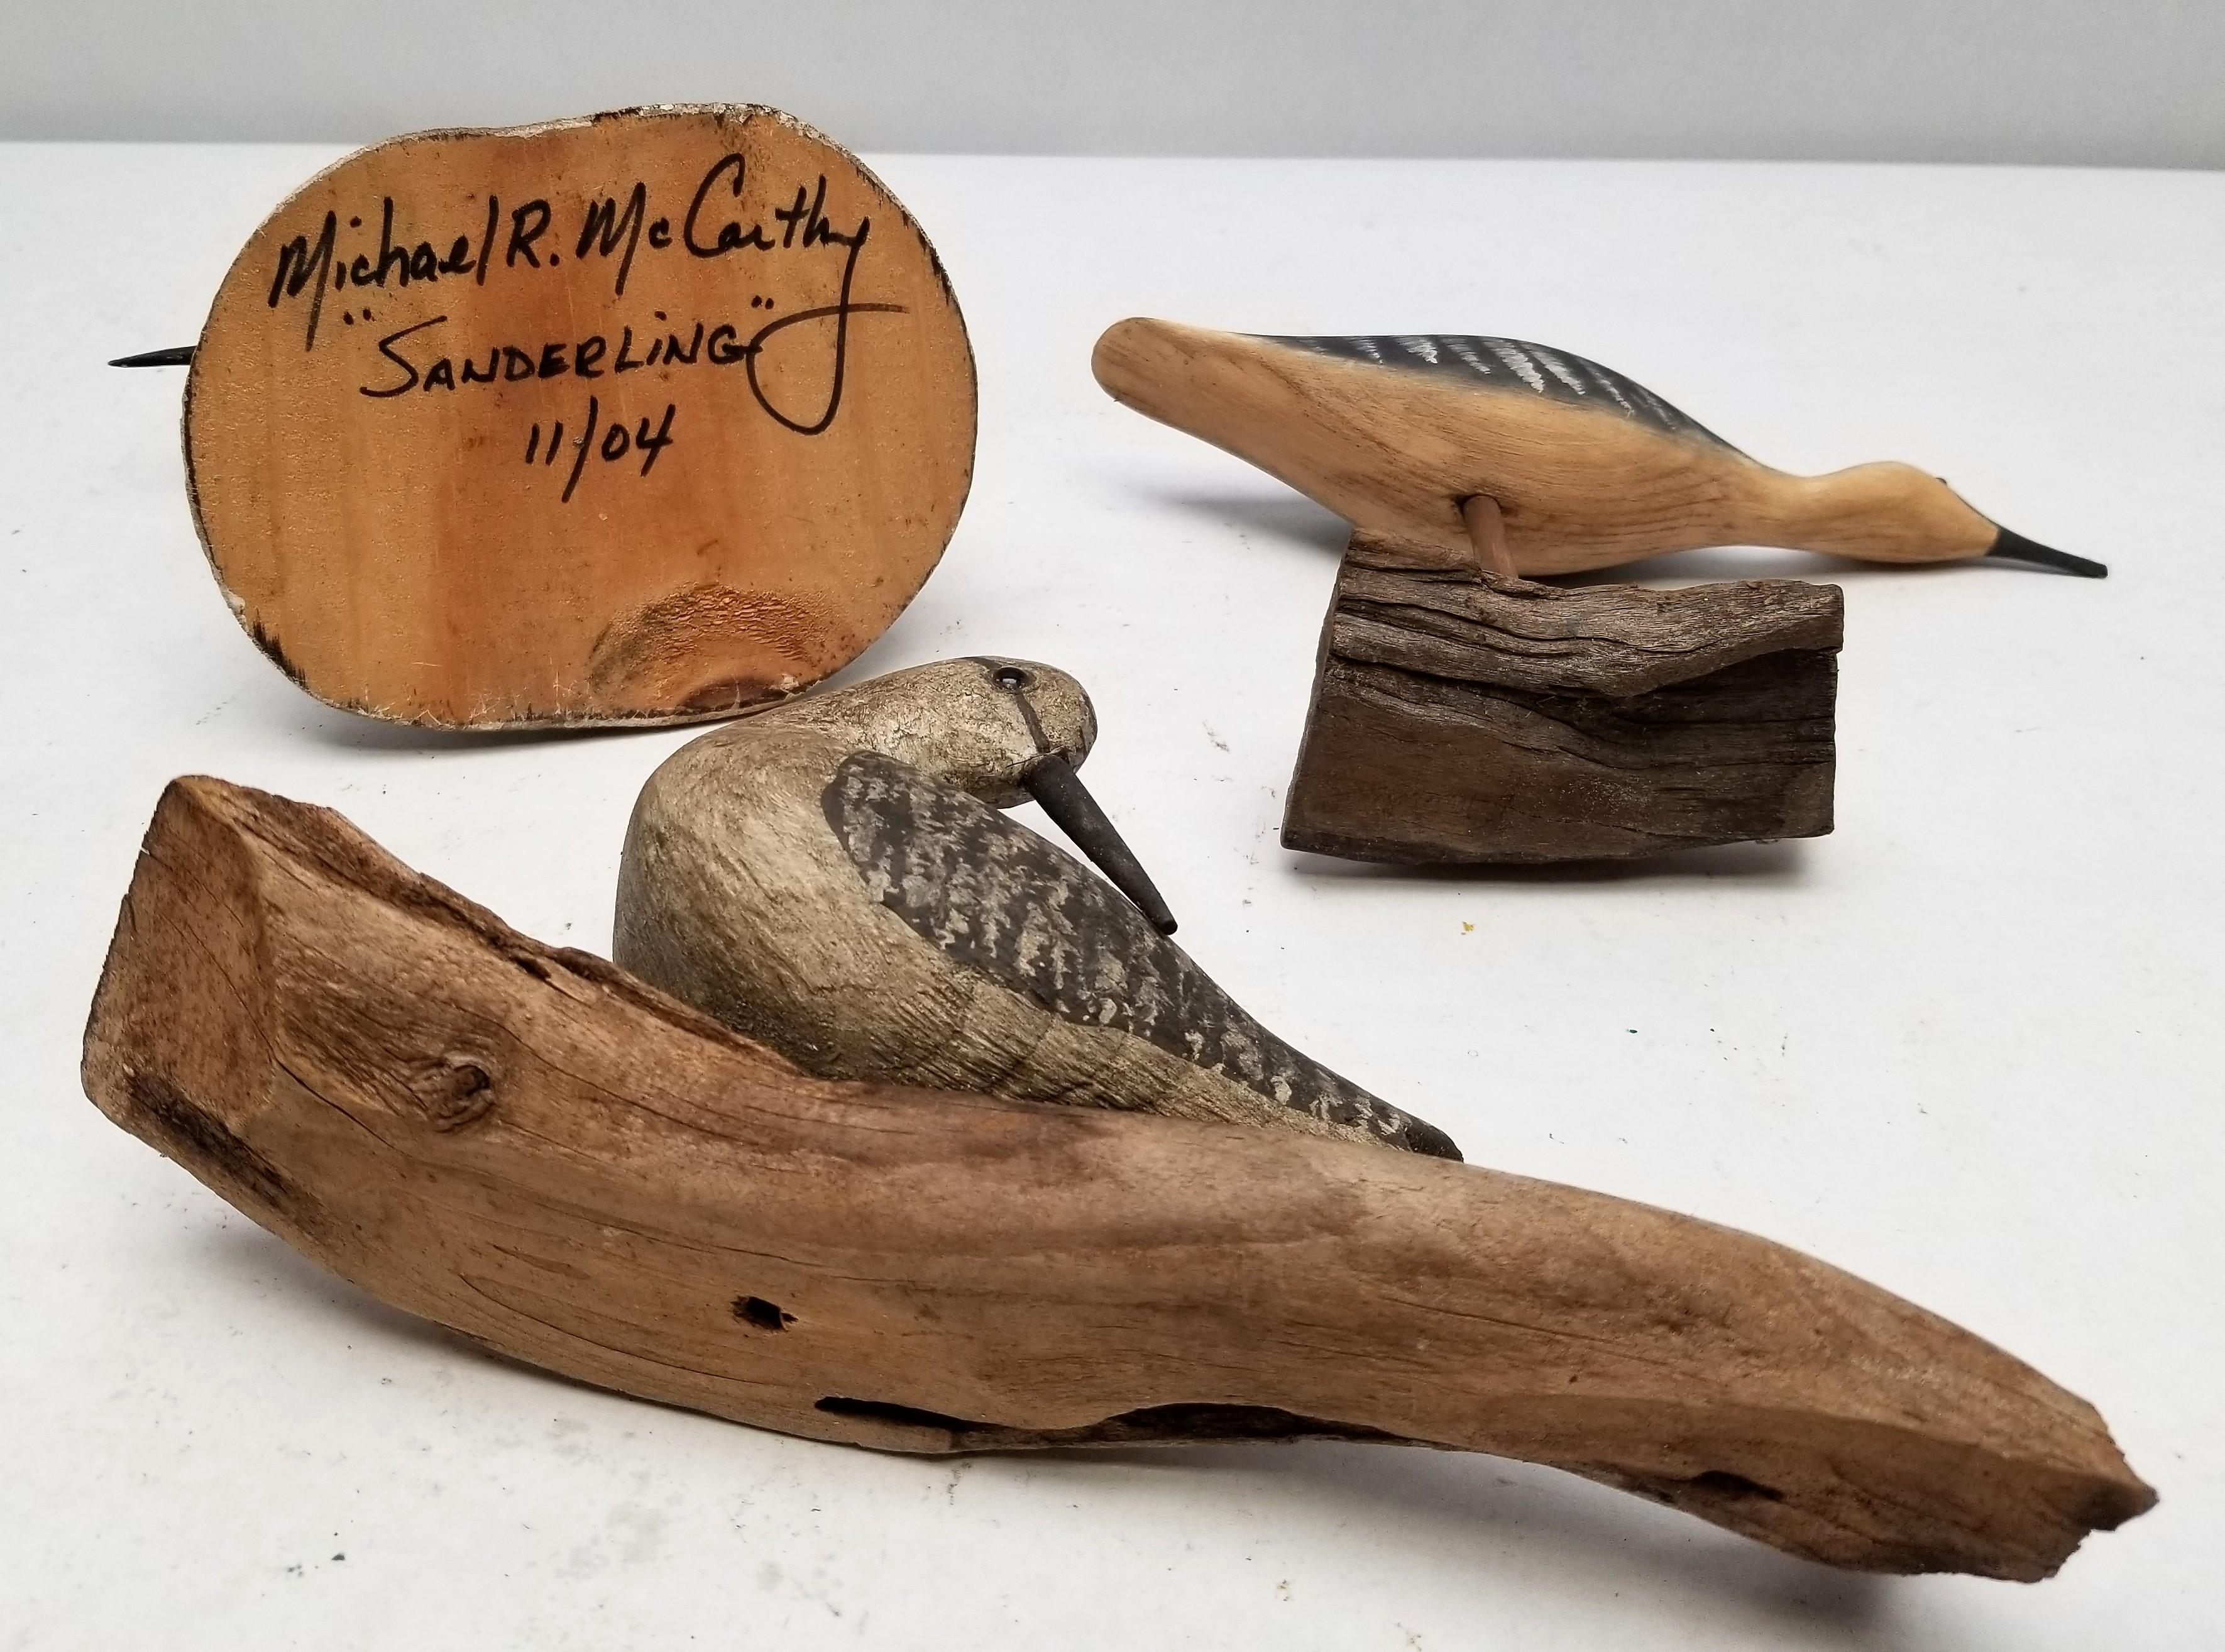 (3) Assorted Hand Carved Wooden Shorebirds